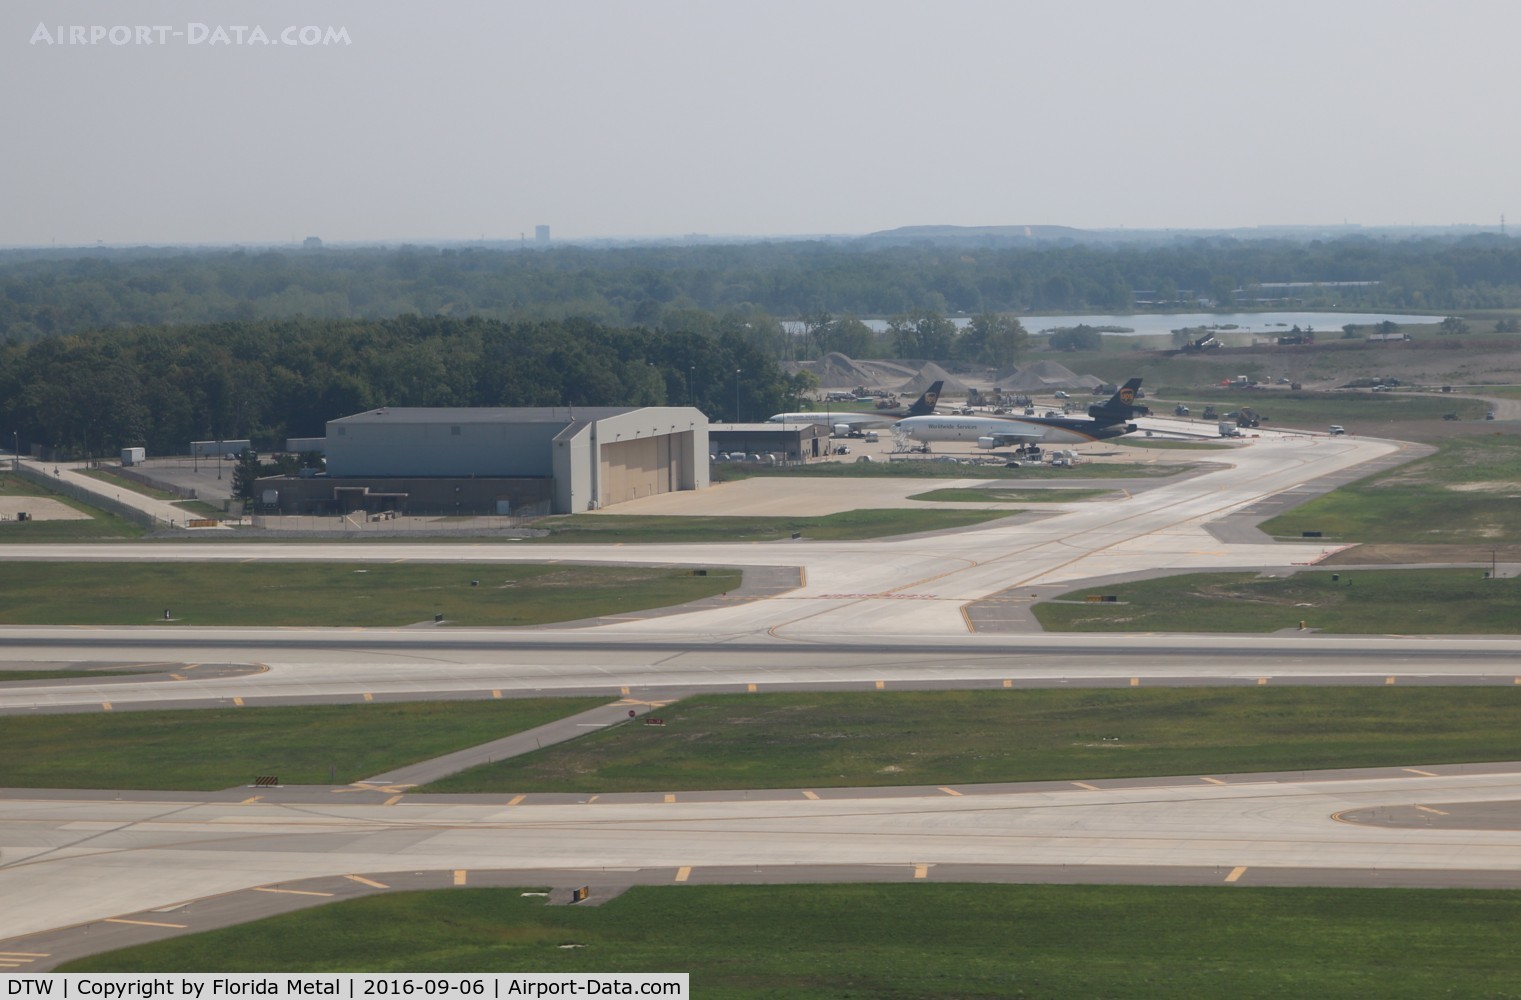 Detroit Metropolitan Wayne County Airport (DTW) - Departing Detroit with UPS area